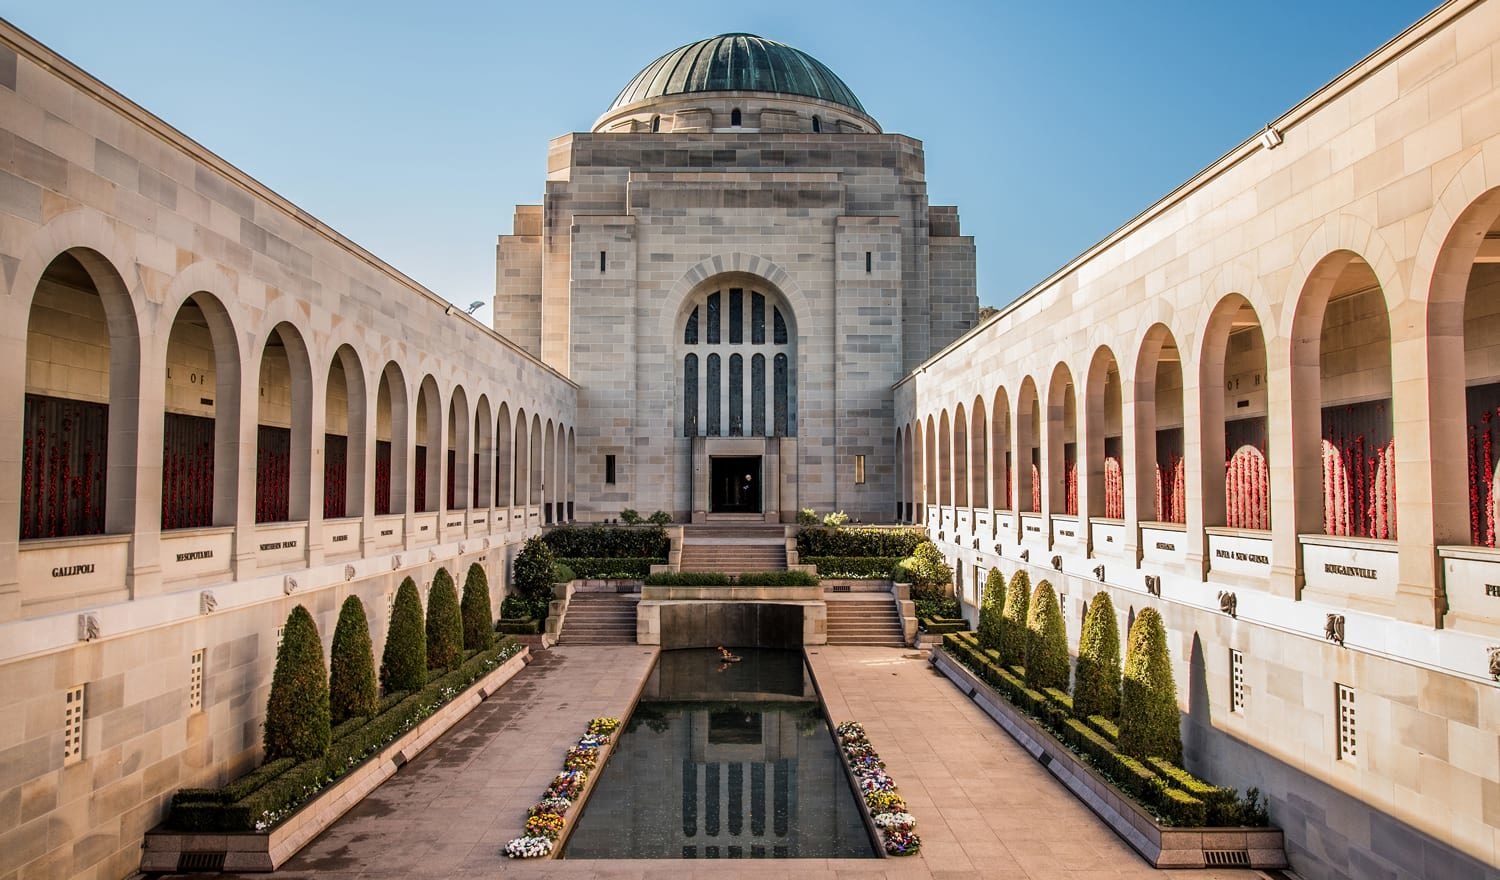 1941 Australian War Memorial in Canberra